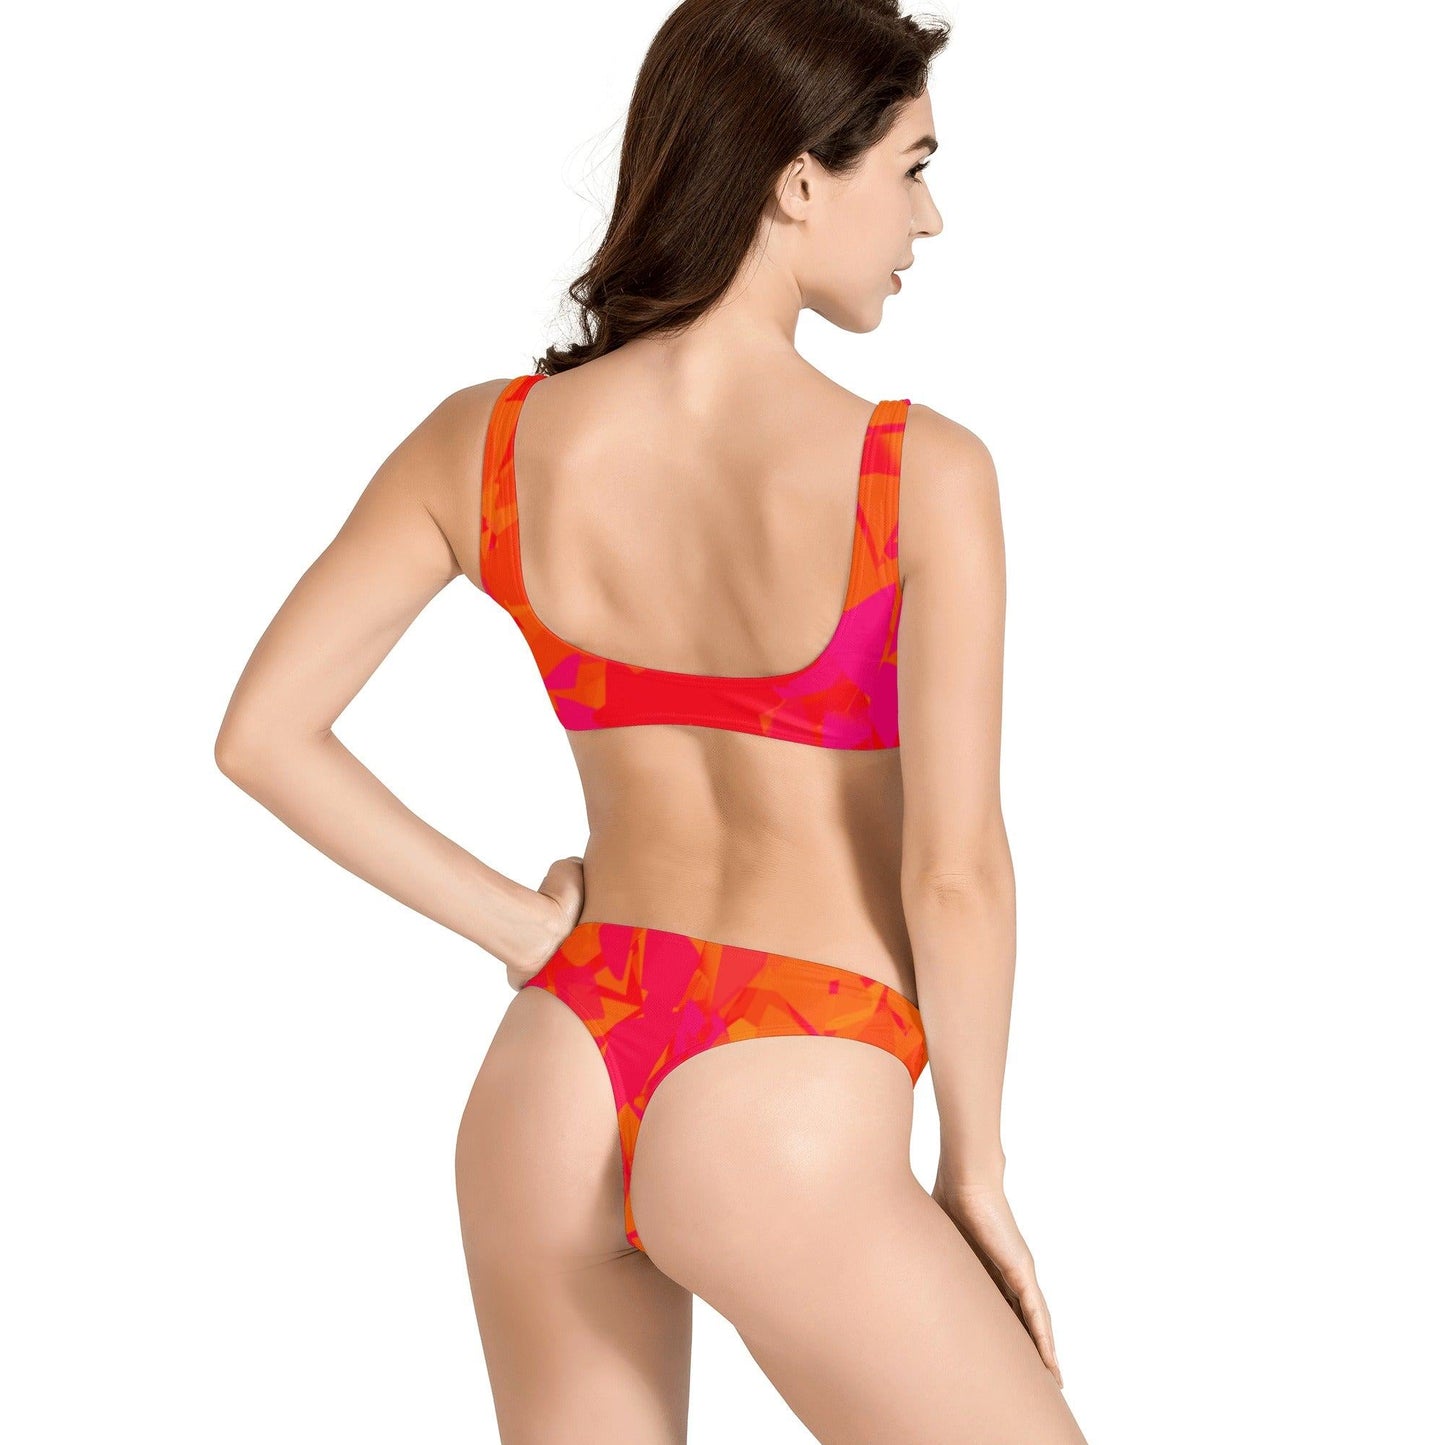 Red Crystal Bikini Badeanzug mit Schleife Bikini mit Schleife 57.99 Bikini, Crystal, Schleife JLR Design